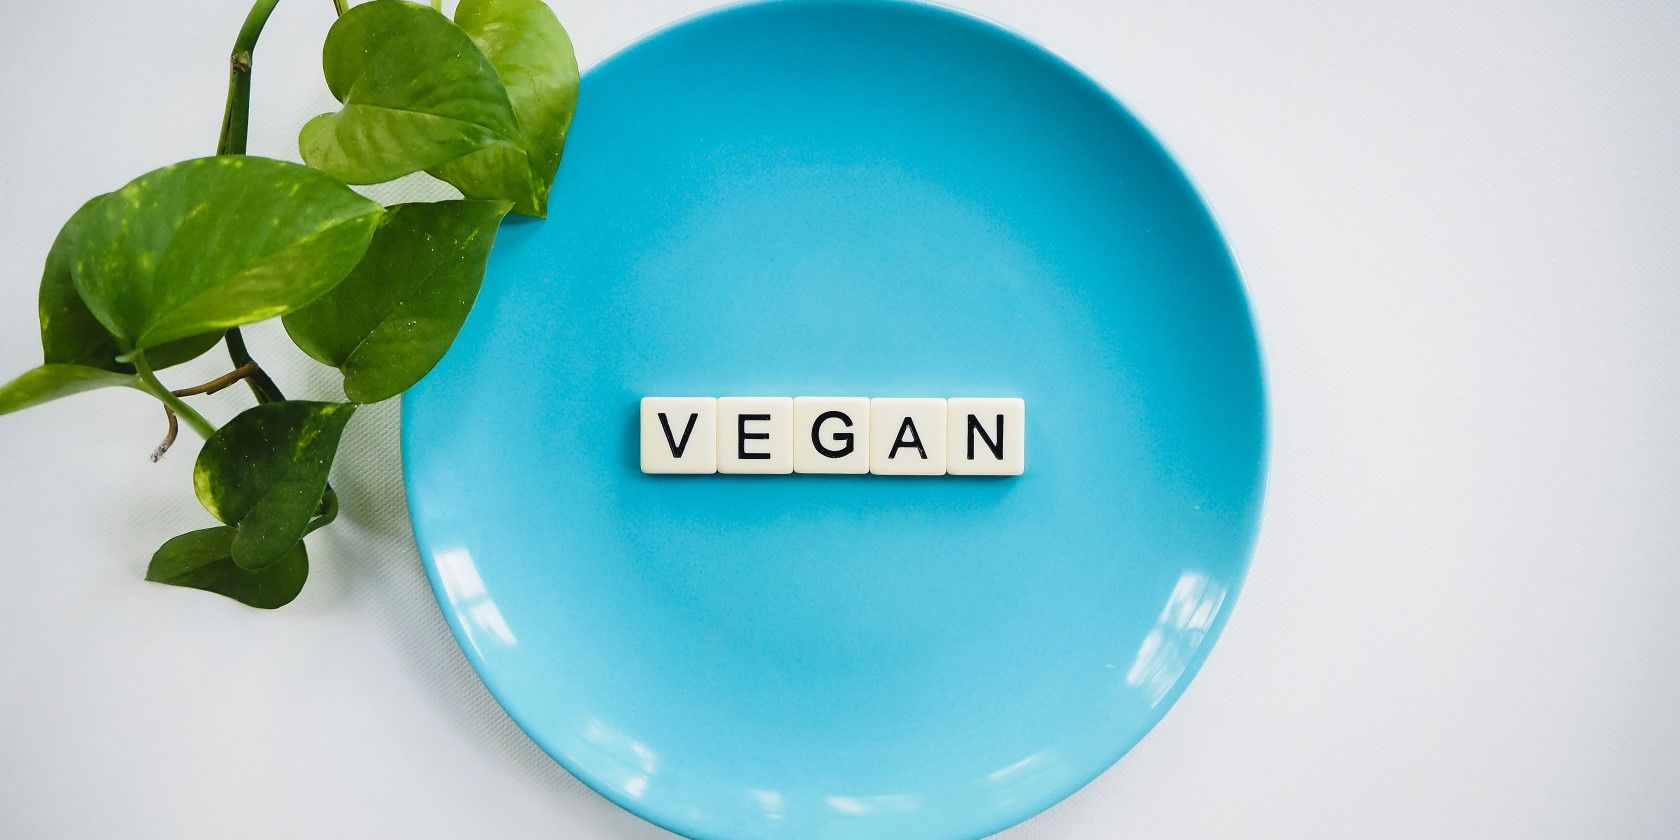 Scrabble tiles on a blue plate that spell vegan